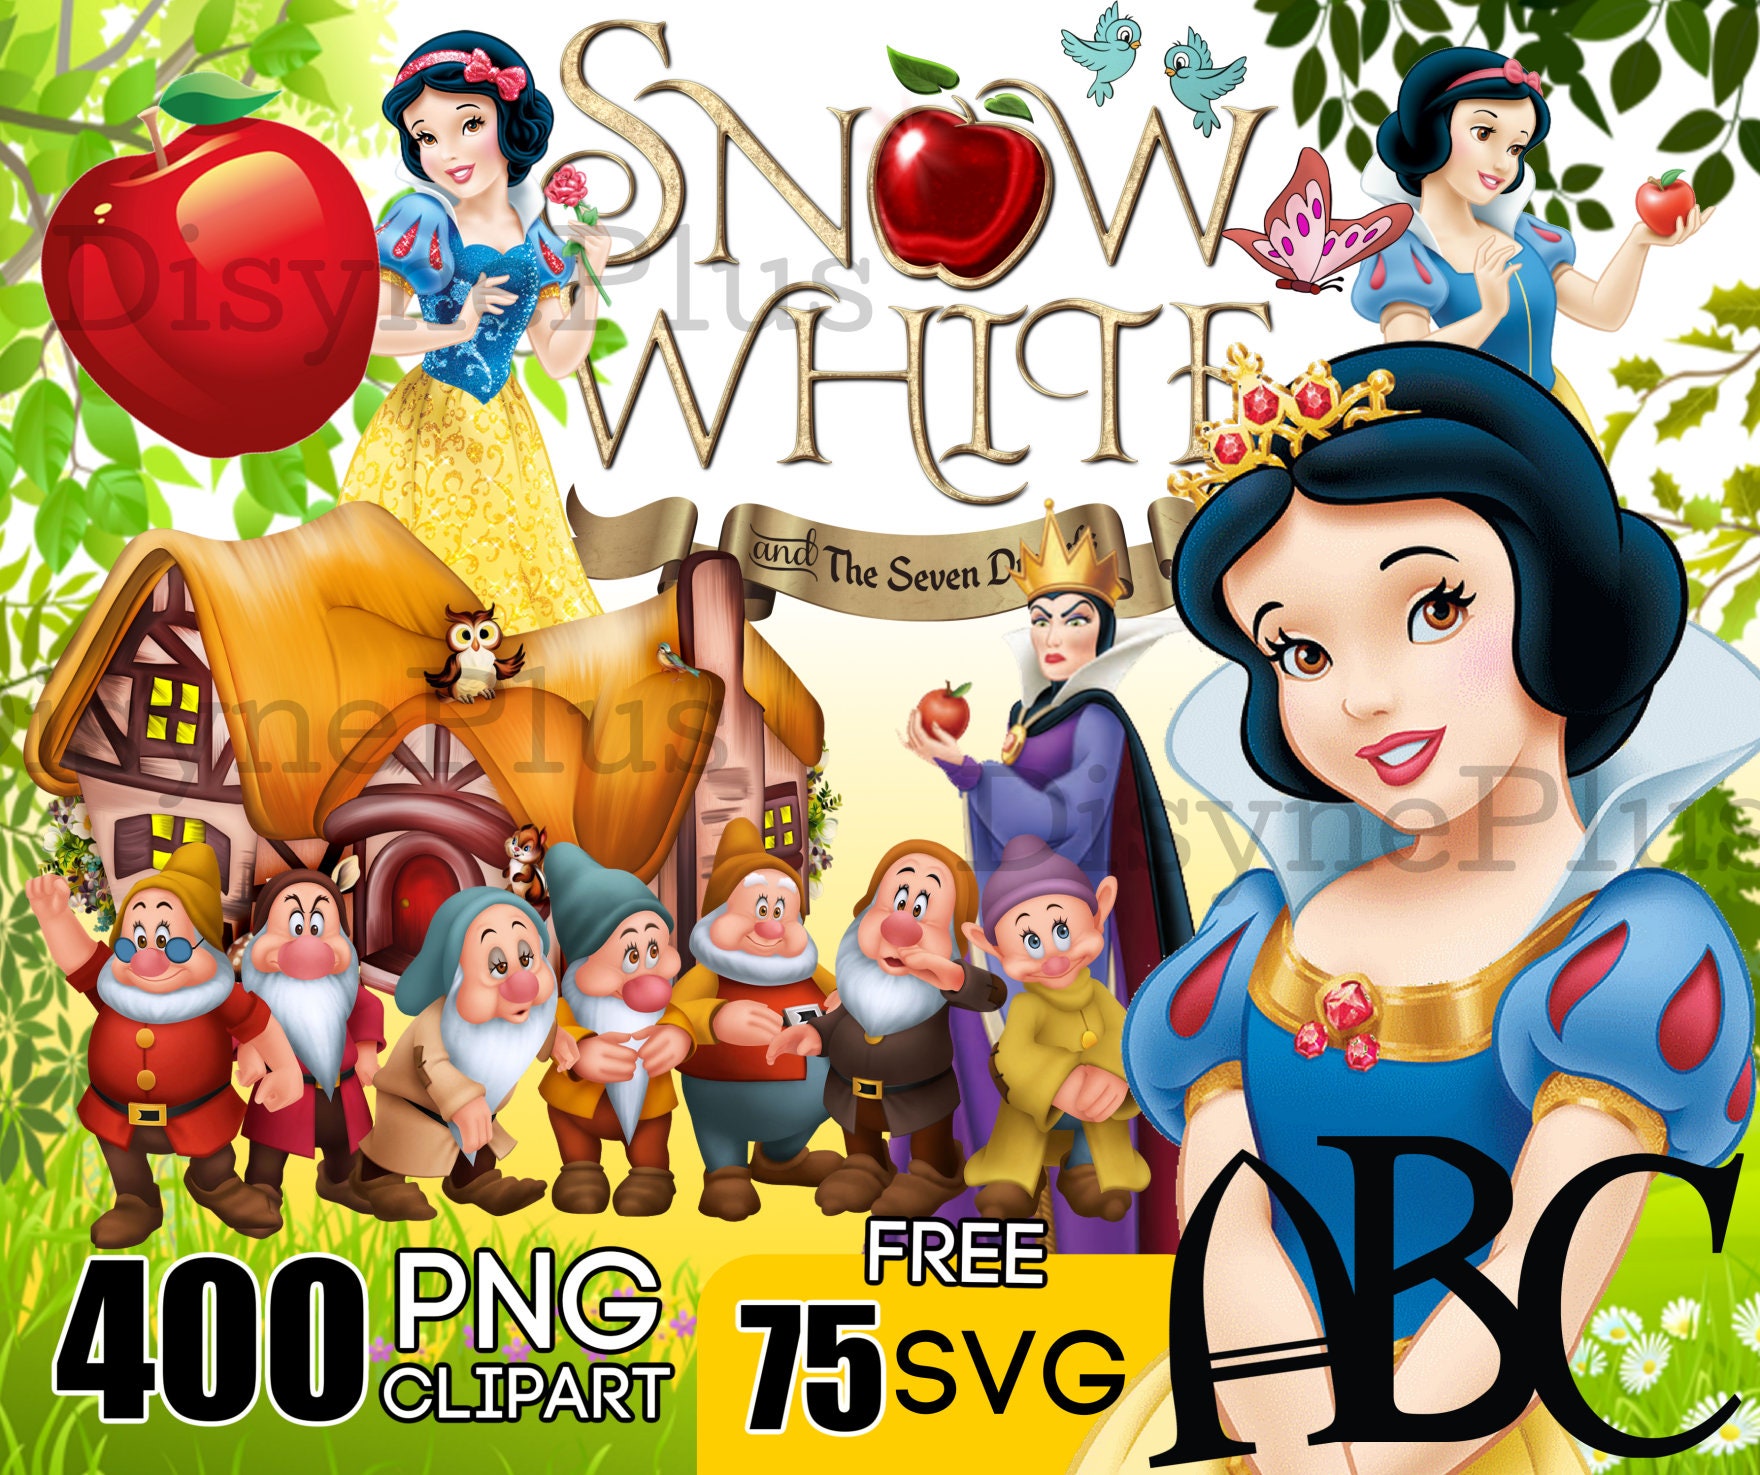 Party Search: Snow White